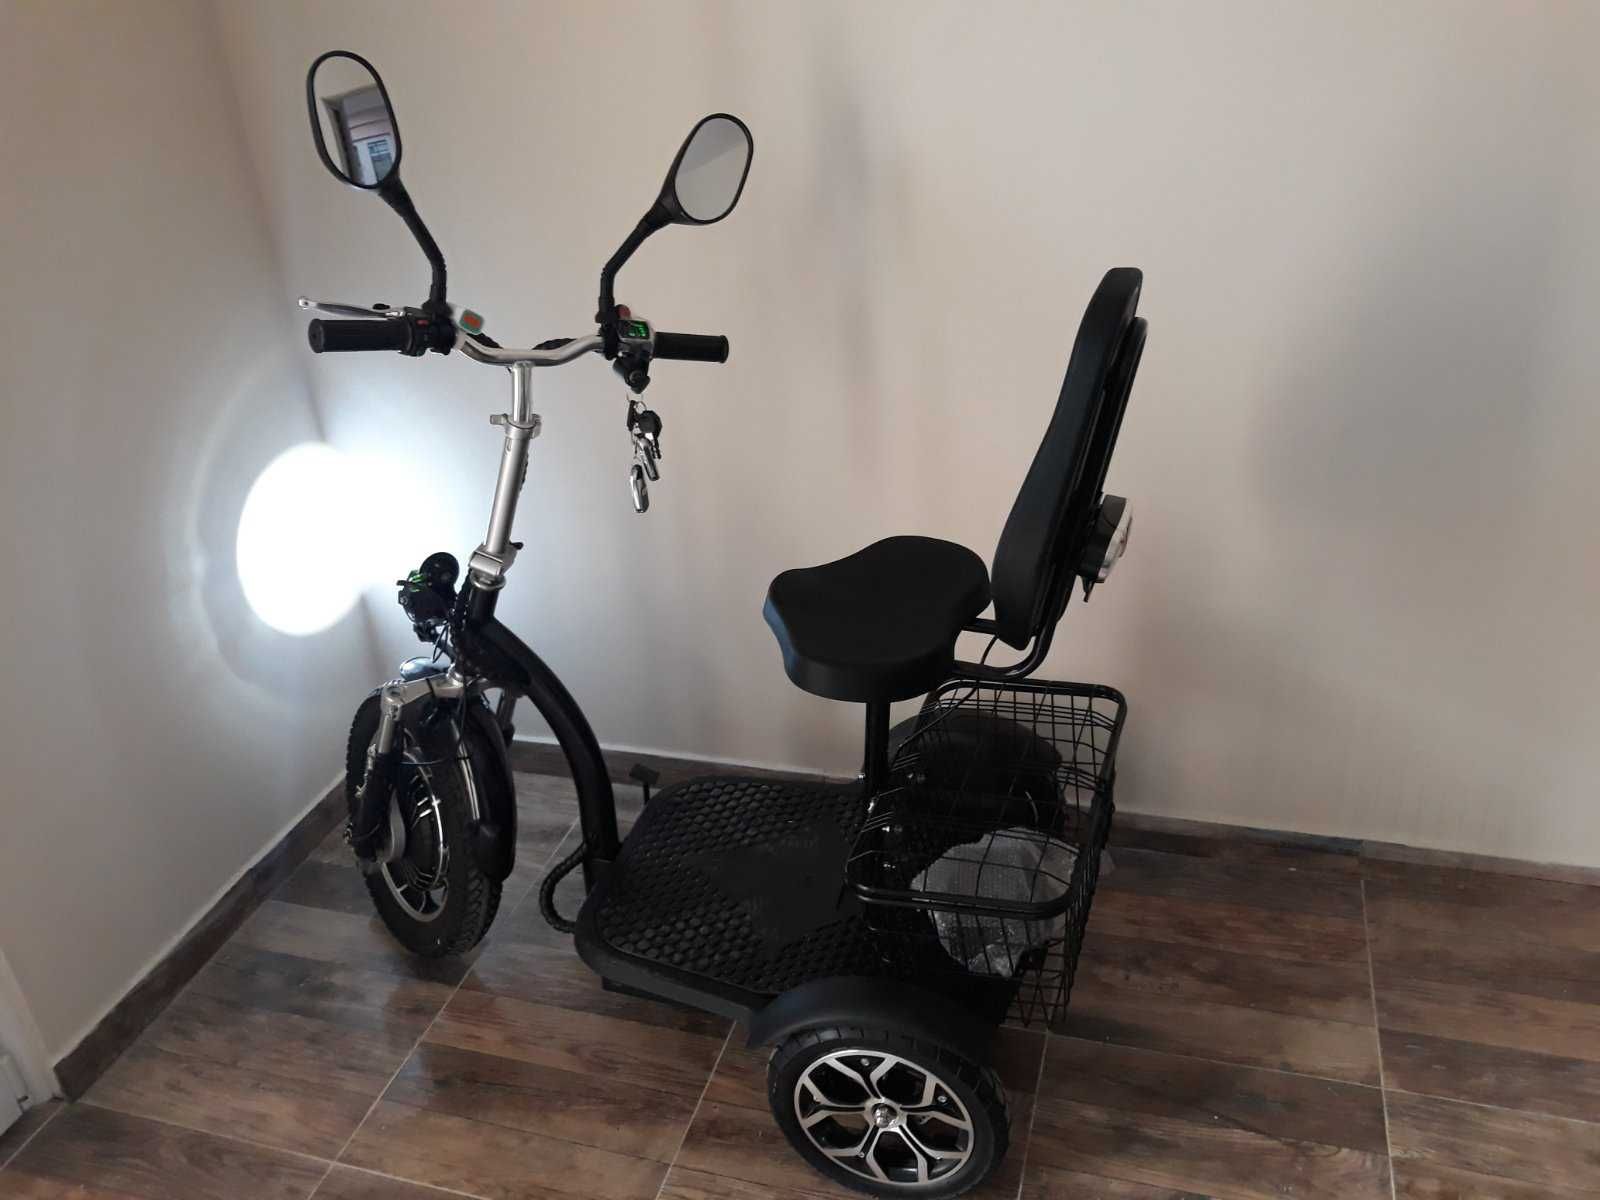 Tricicleta electrica LUXURY 500W -32% garantie full options varstnici